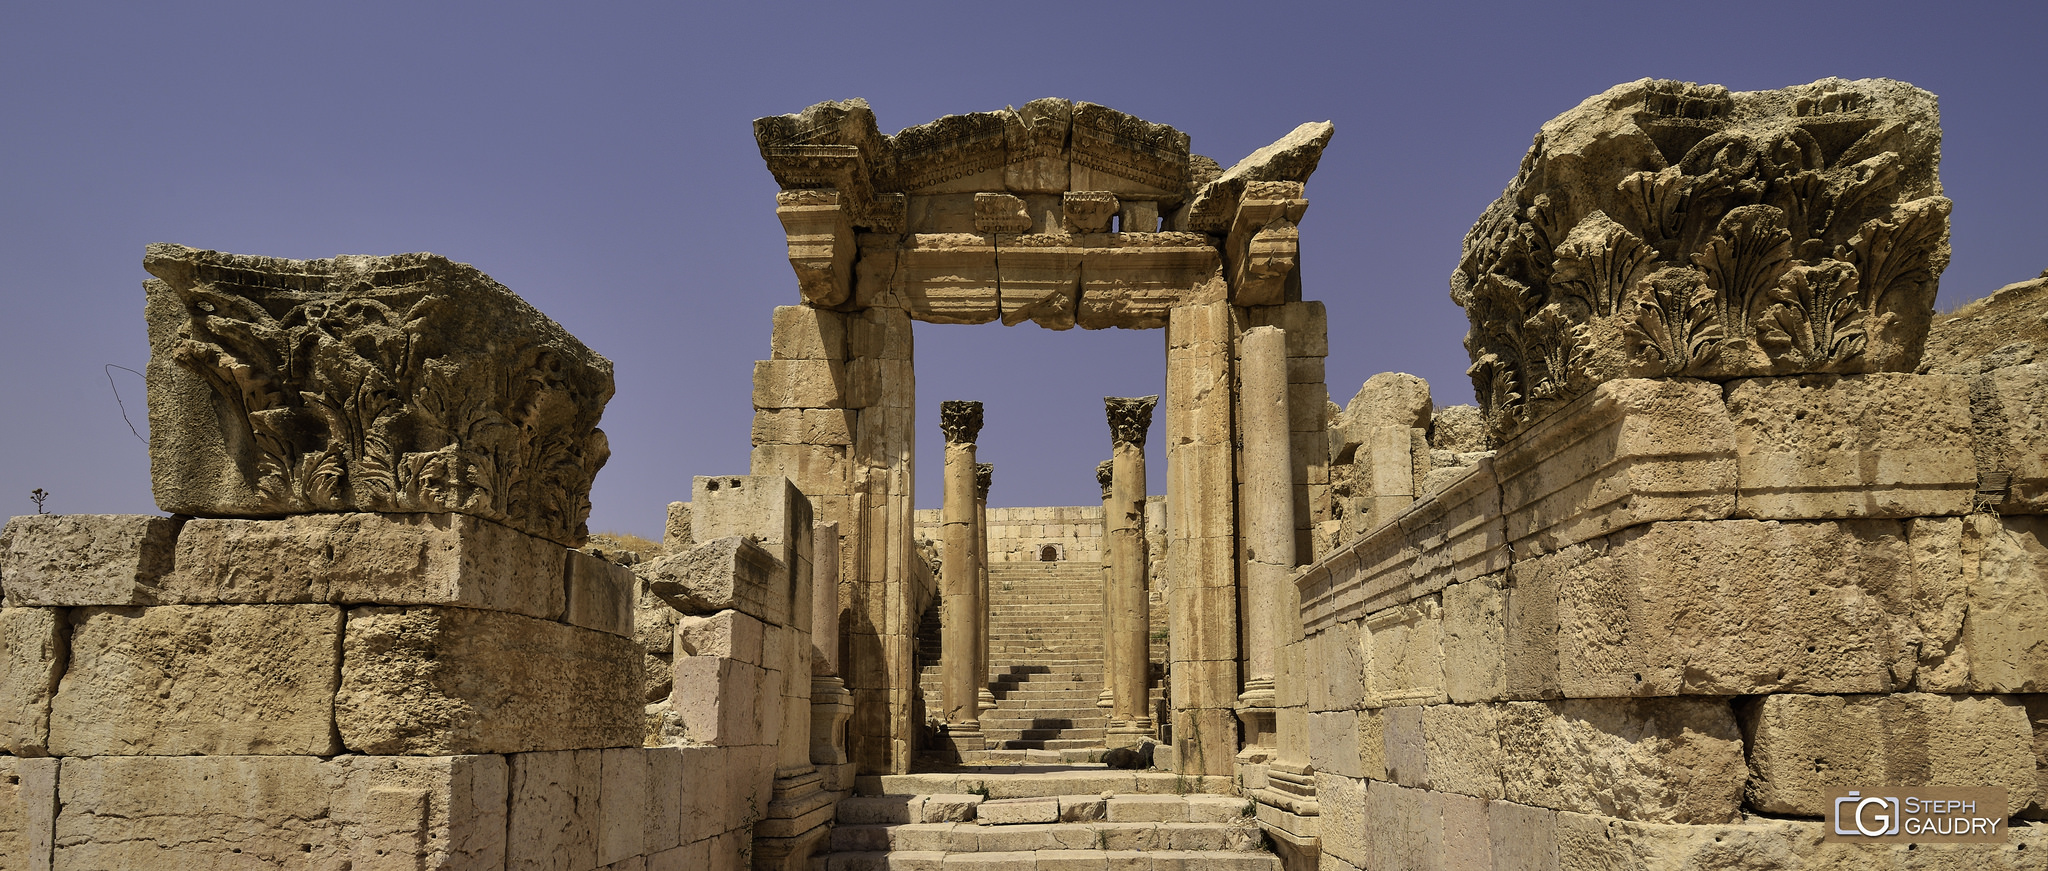 Jerash (JOR) Le temple de Dionysos [Klik om de diavoorstelling te starten]